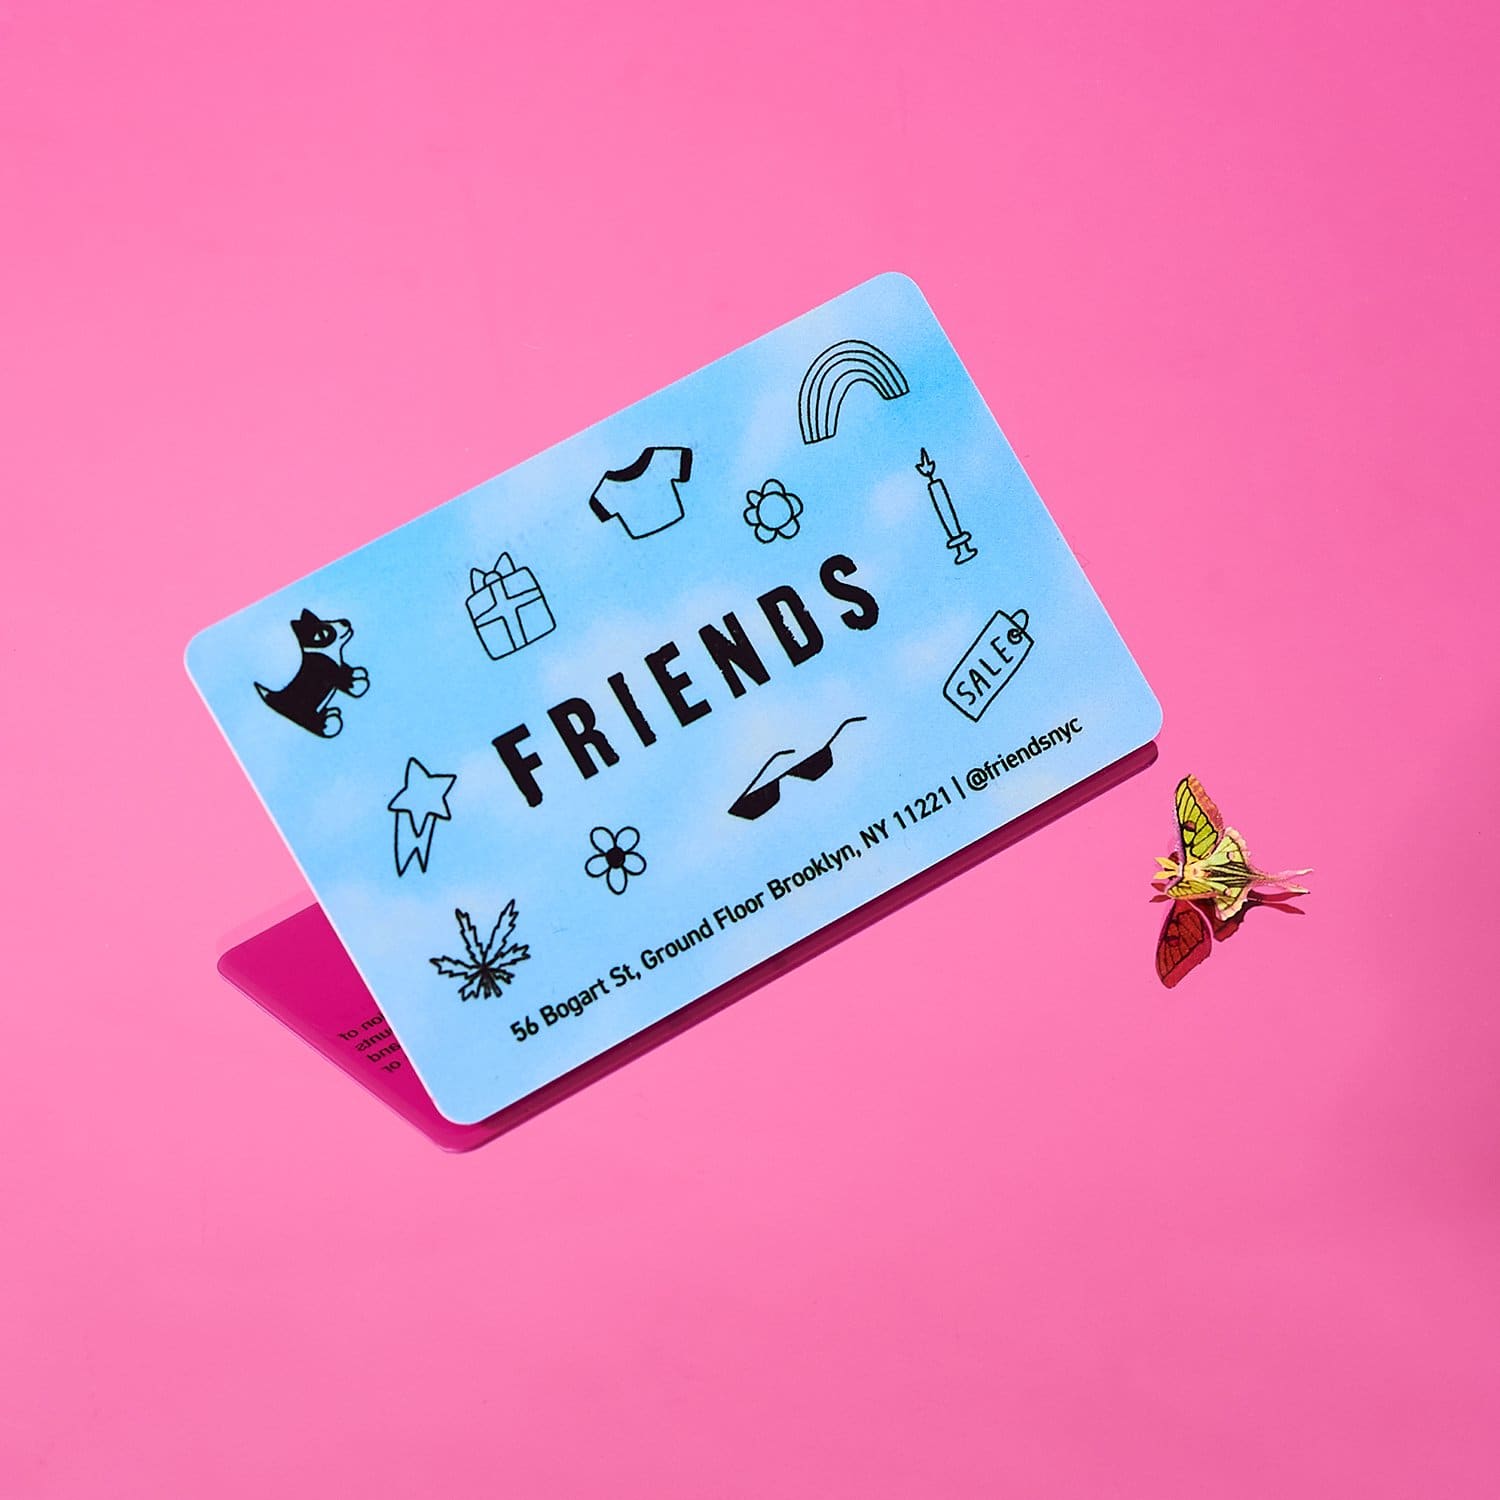 Friends Webstore Gift Card